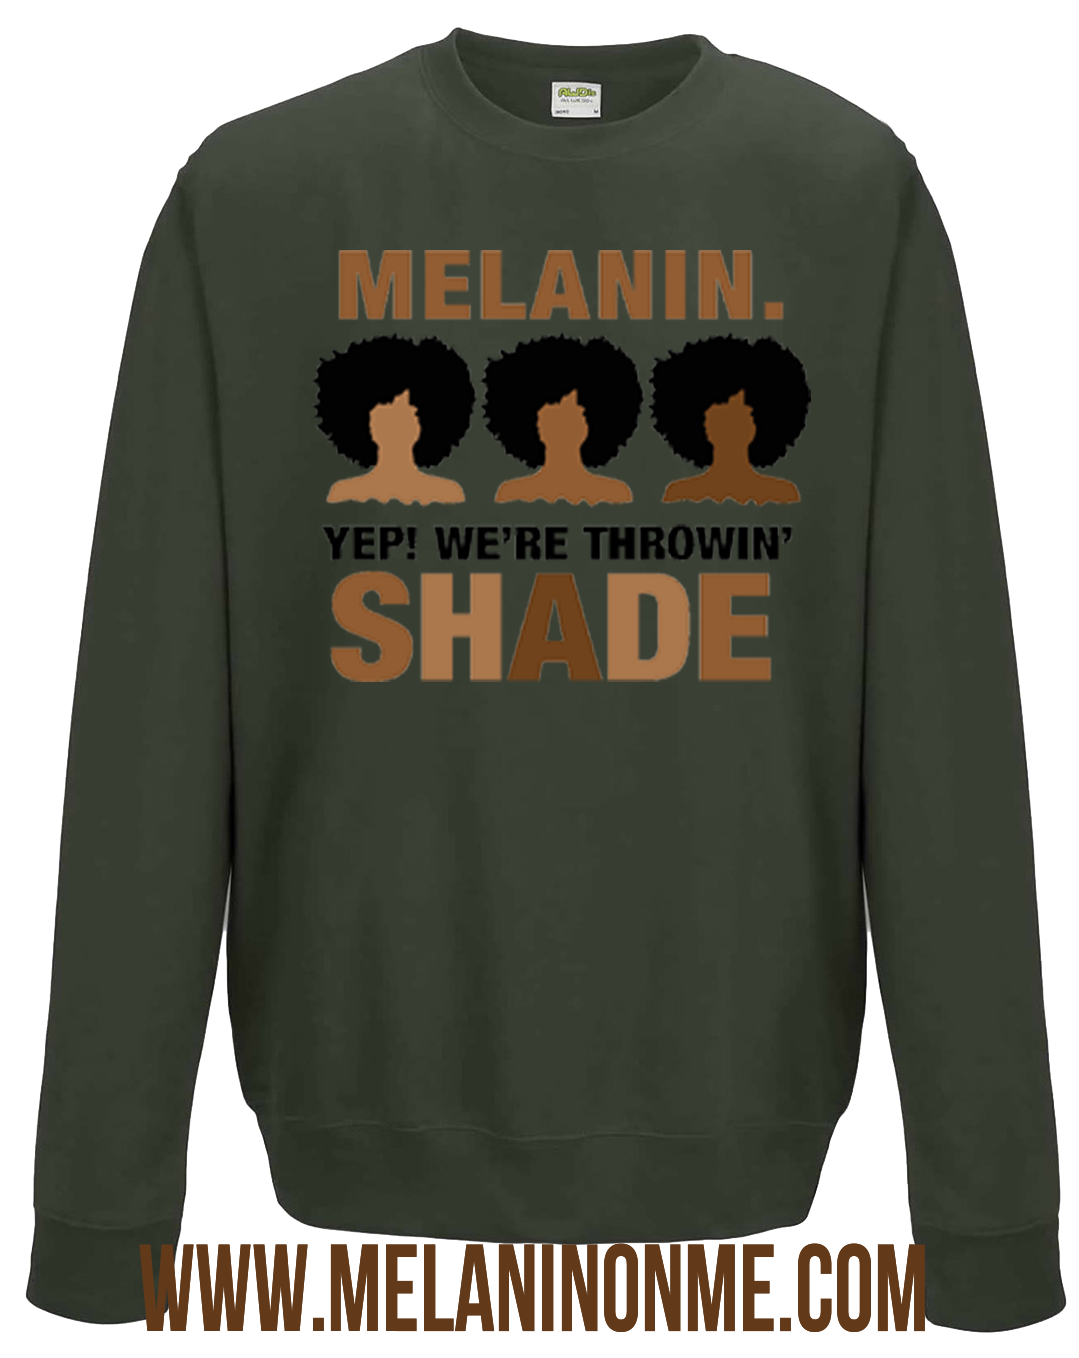 Yep We're throwing shade (Limited Edition) Sweatshirt